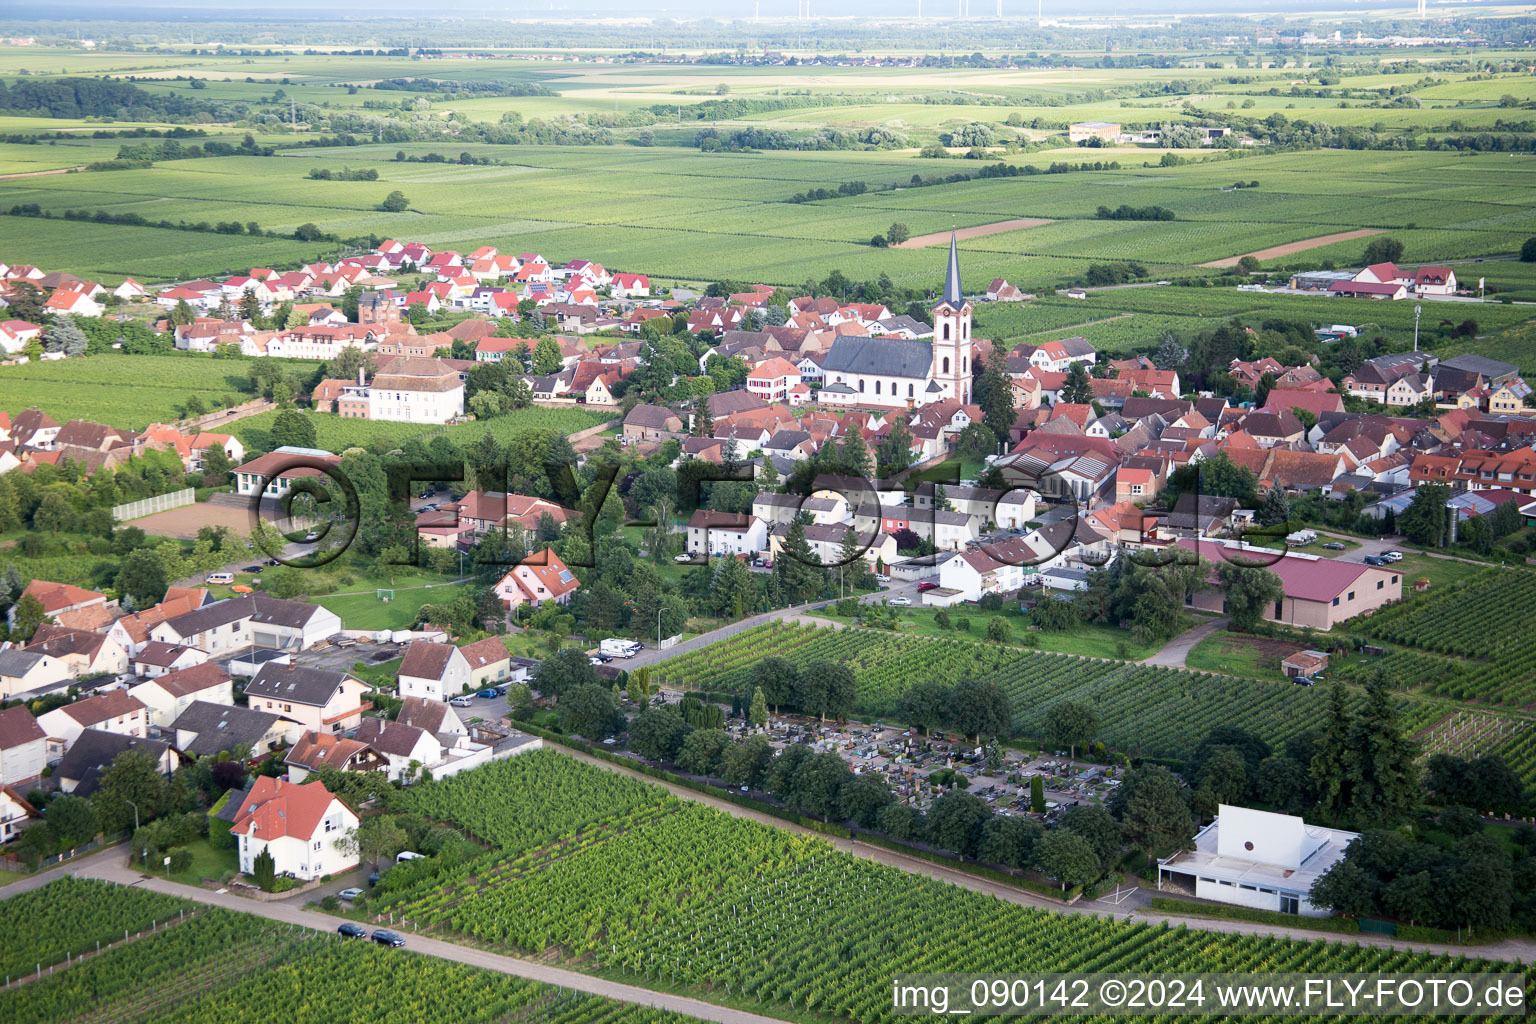 Bird's eye view of Edesheim in the state Rhineland-Palatinate, Germany